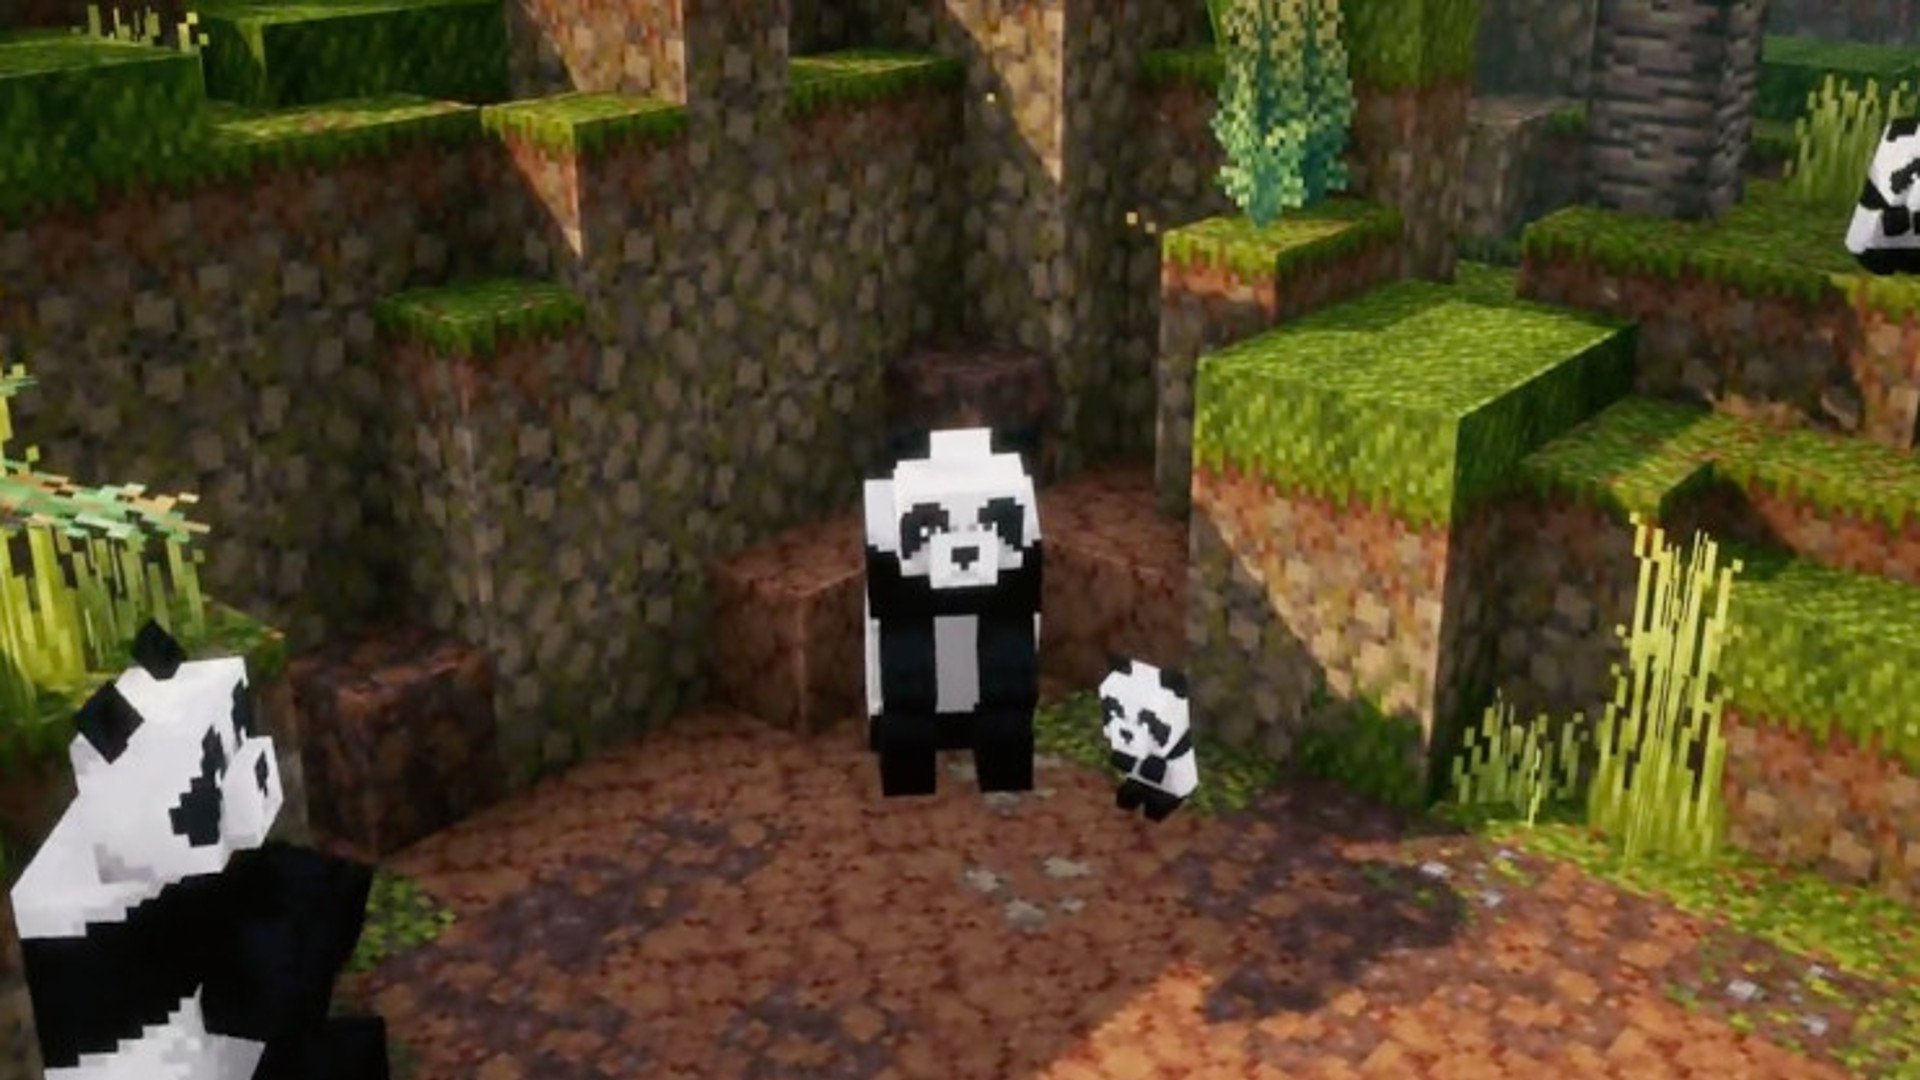 Where to find pandas in Minecraft